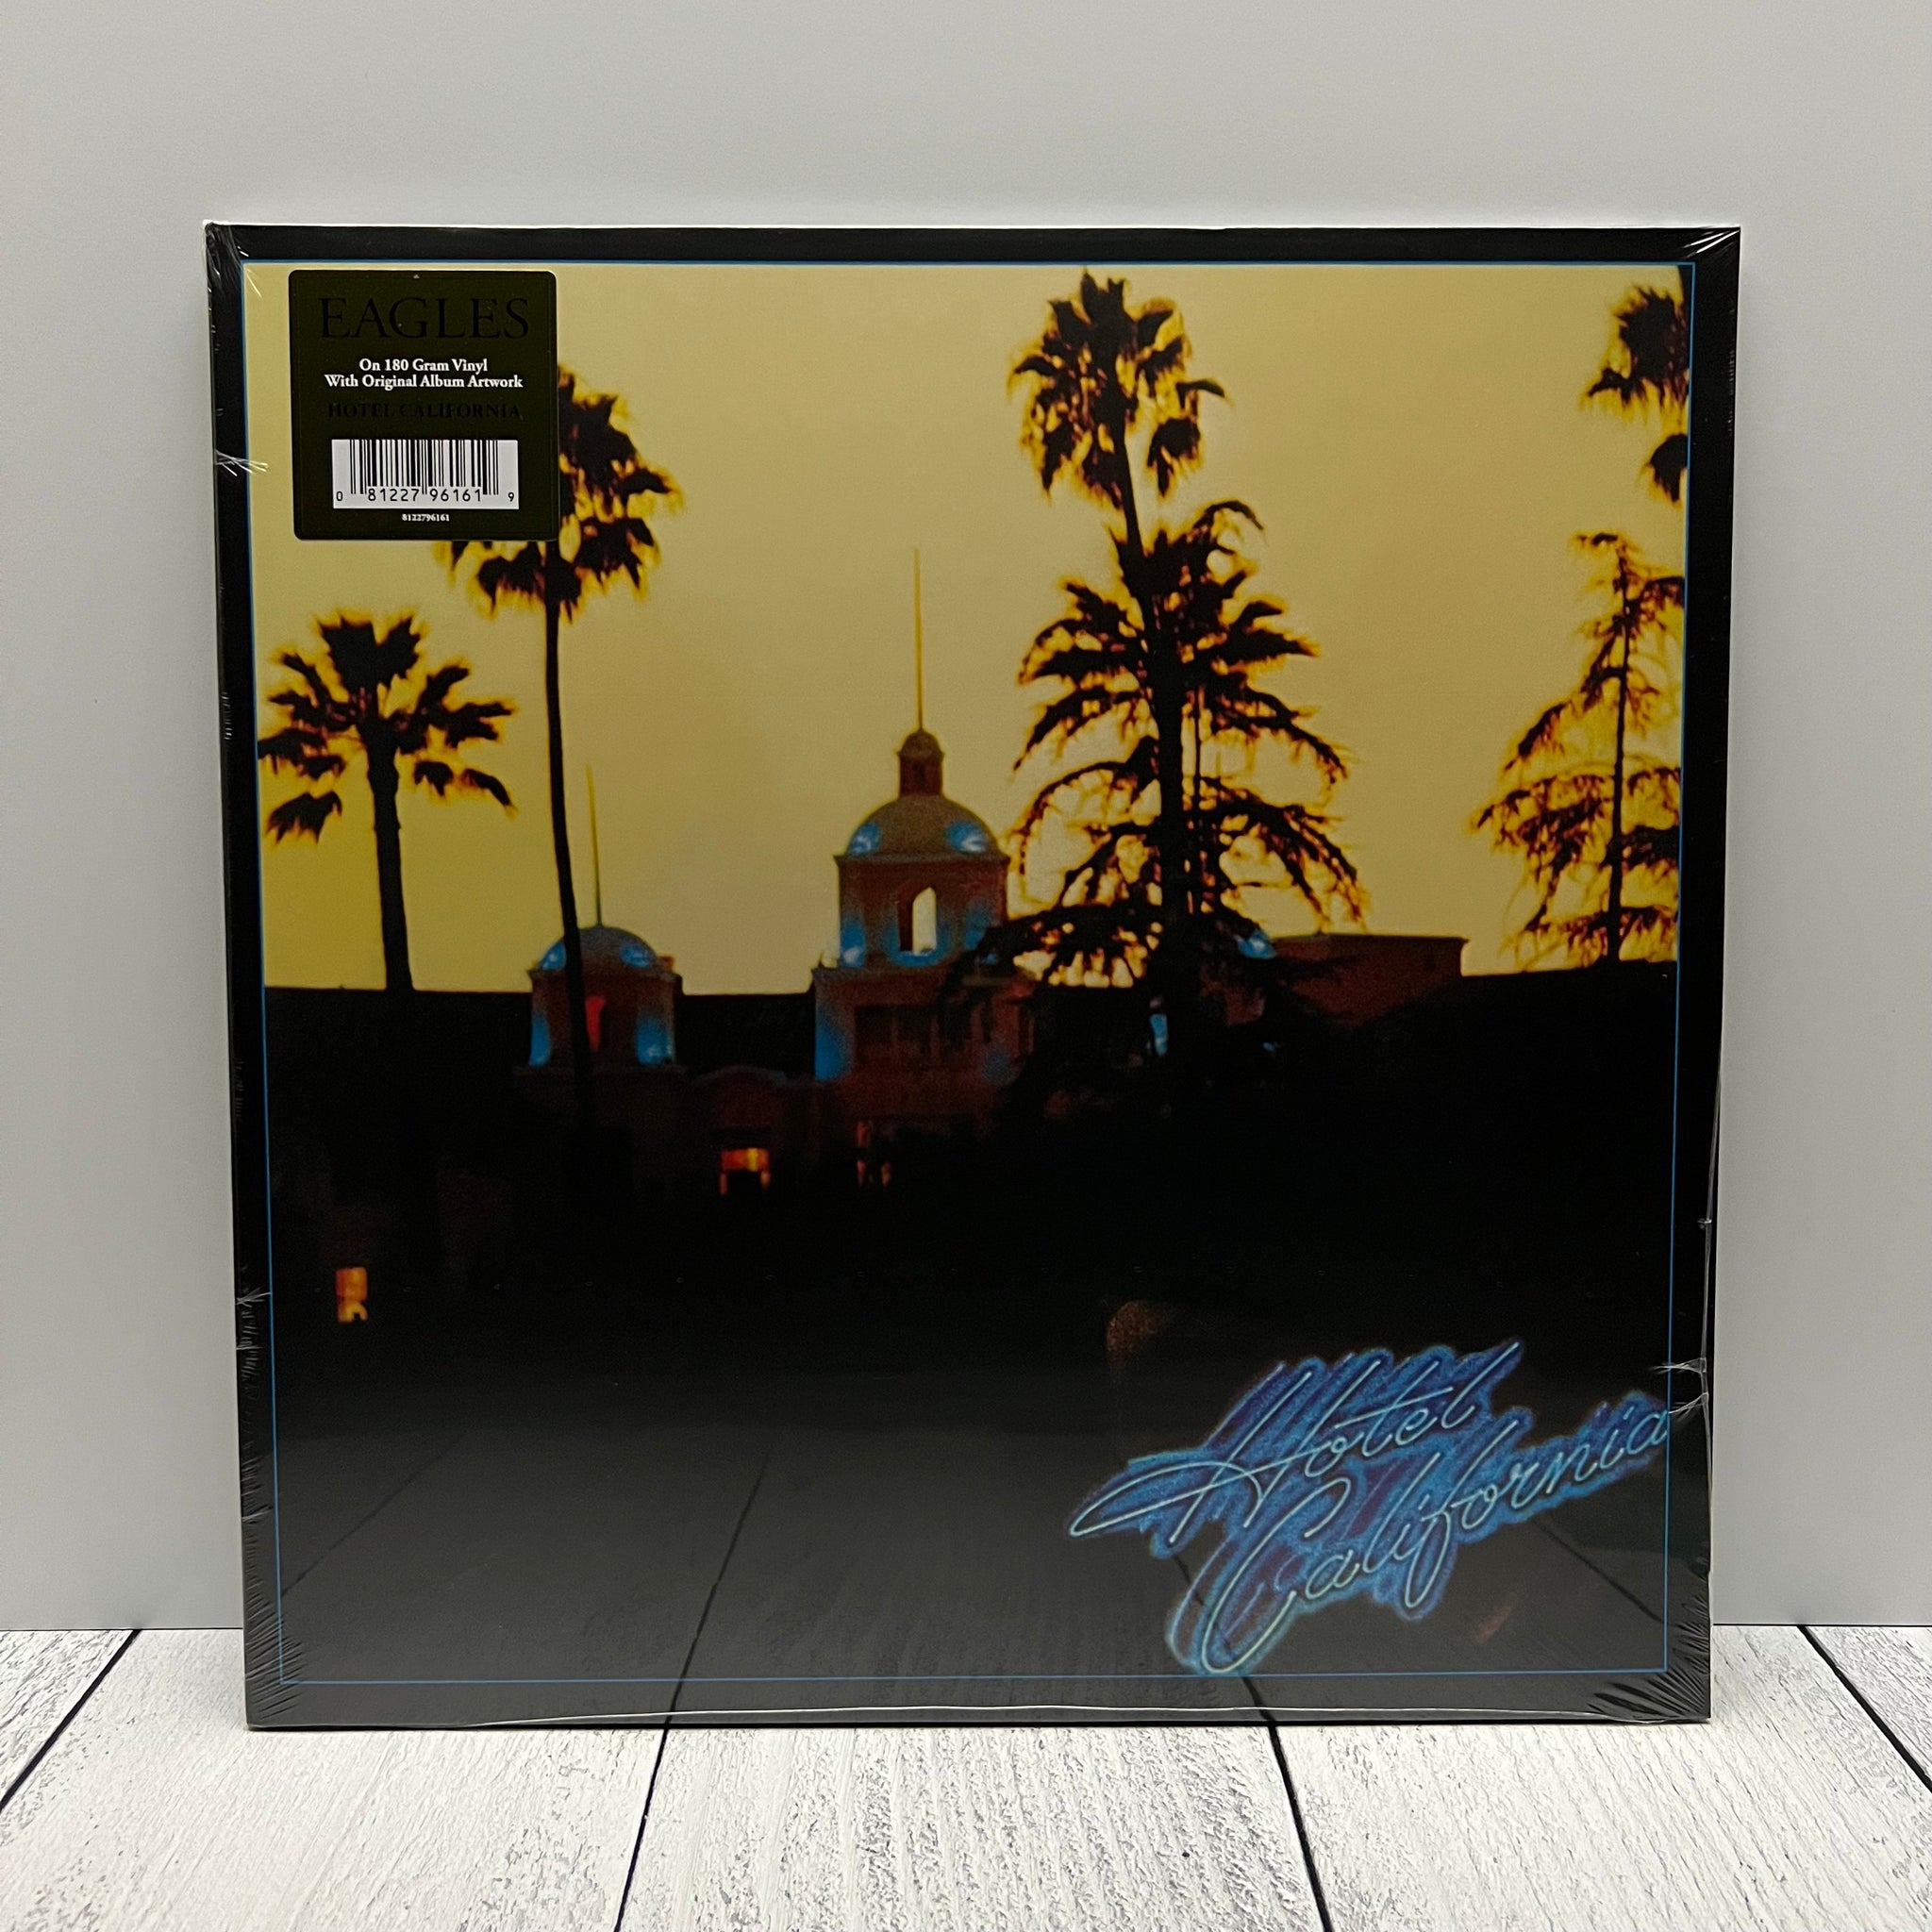 The Eagles - Hotel California – Rustic Records